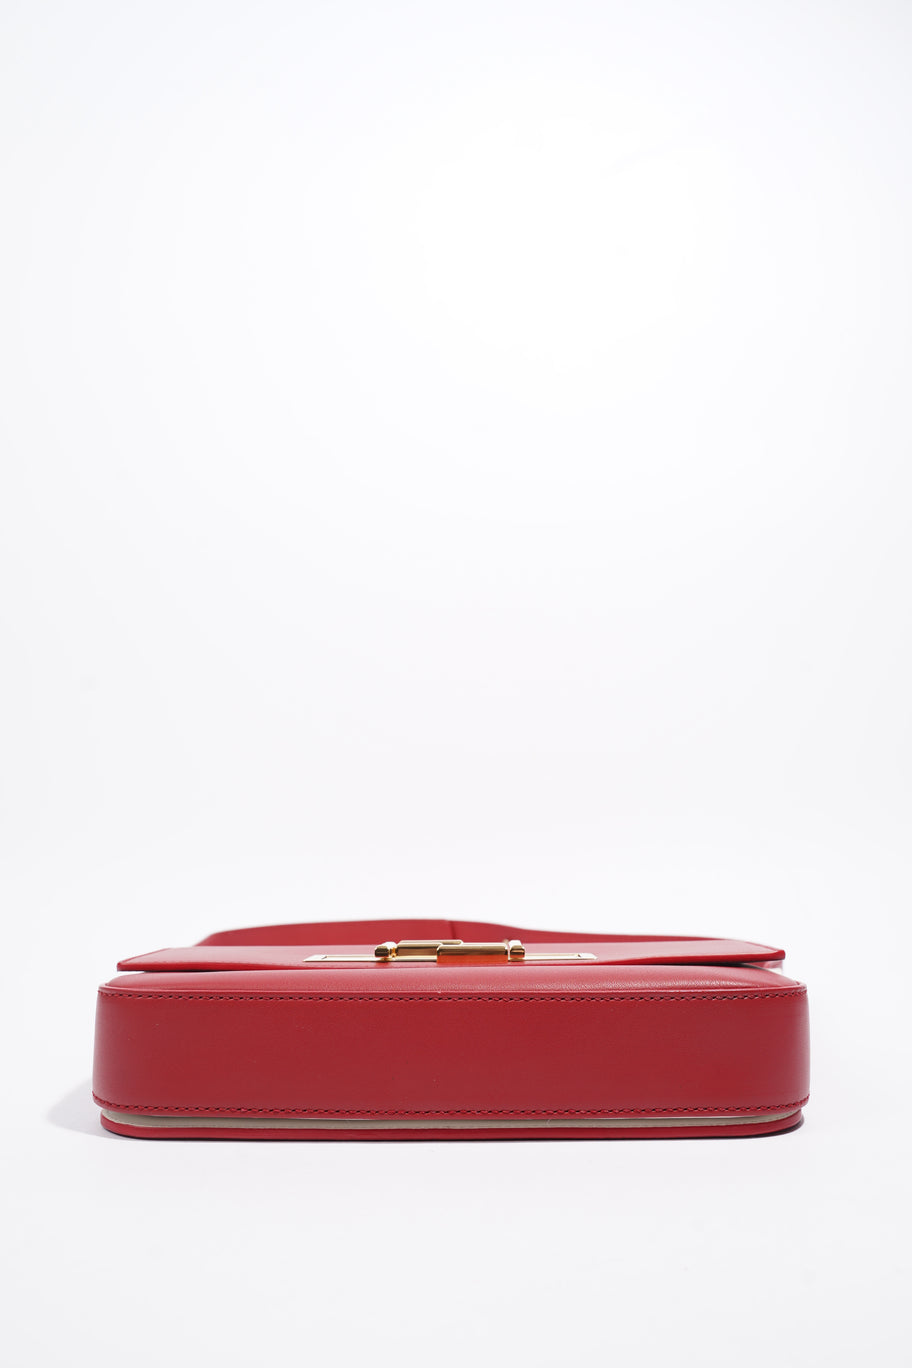 Baguette Bag Red Leather Image 7